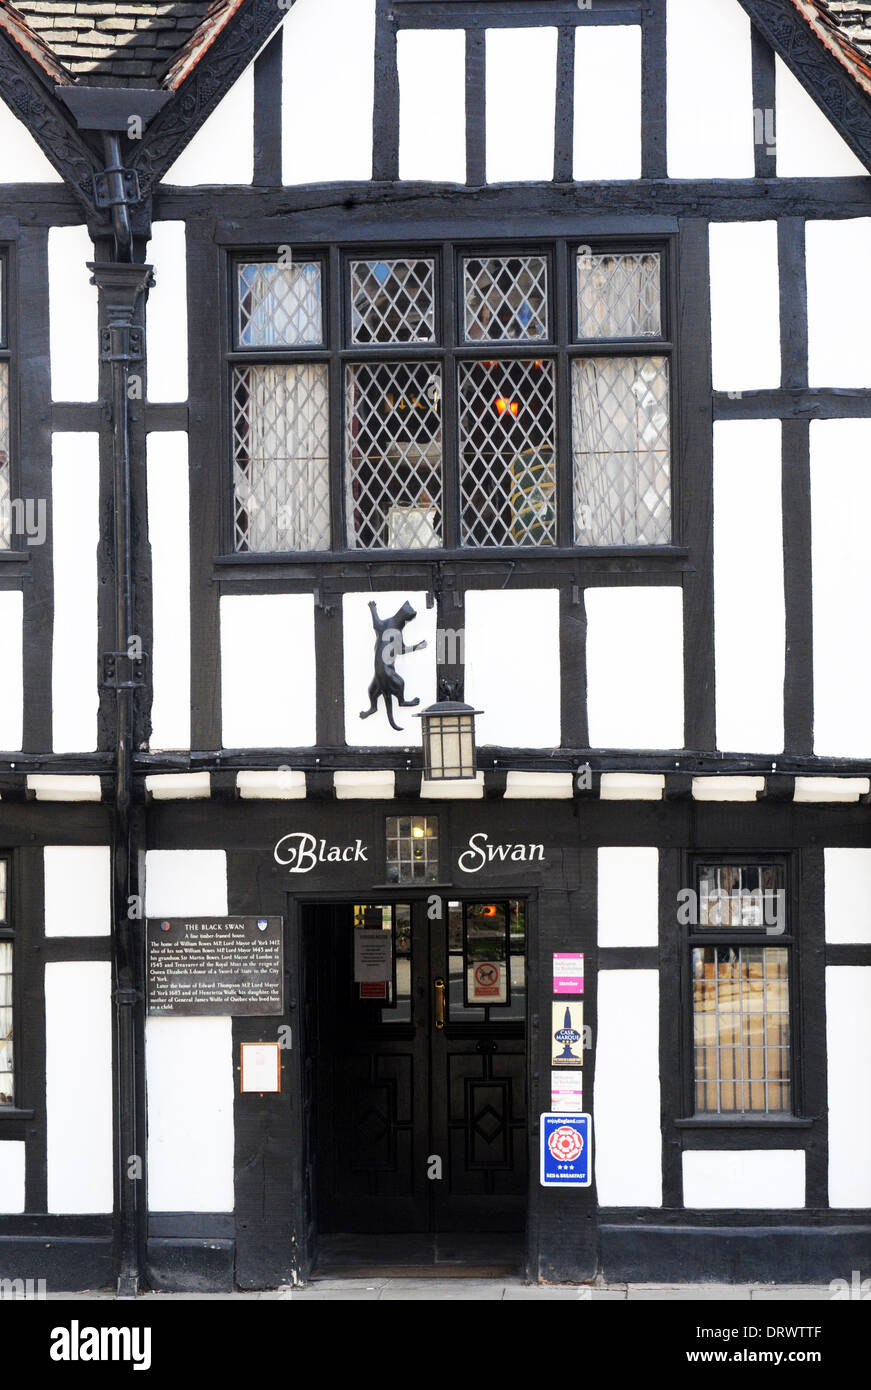 The Swan pub in York, UK Stock Photo - Alamy